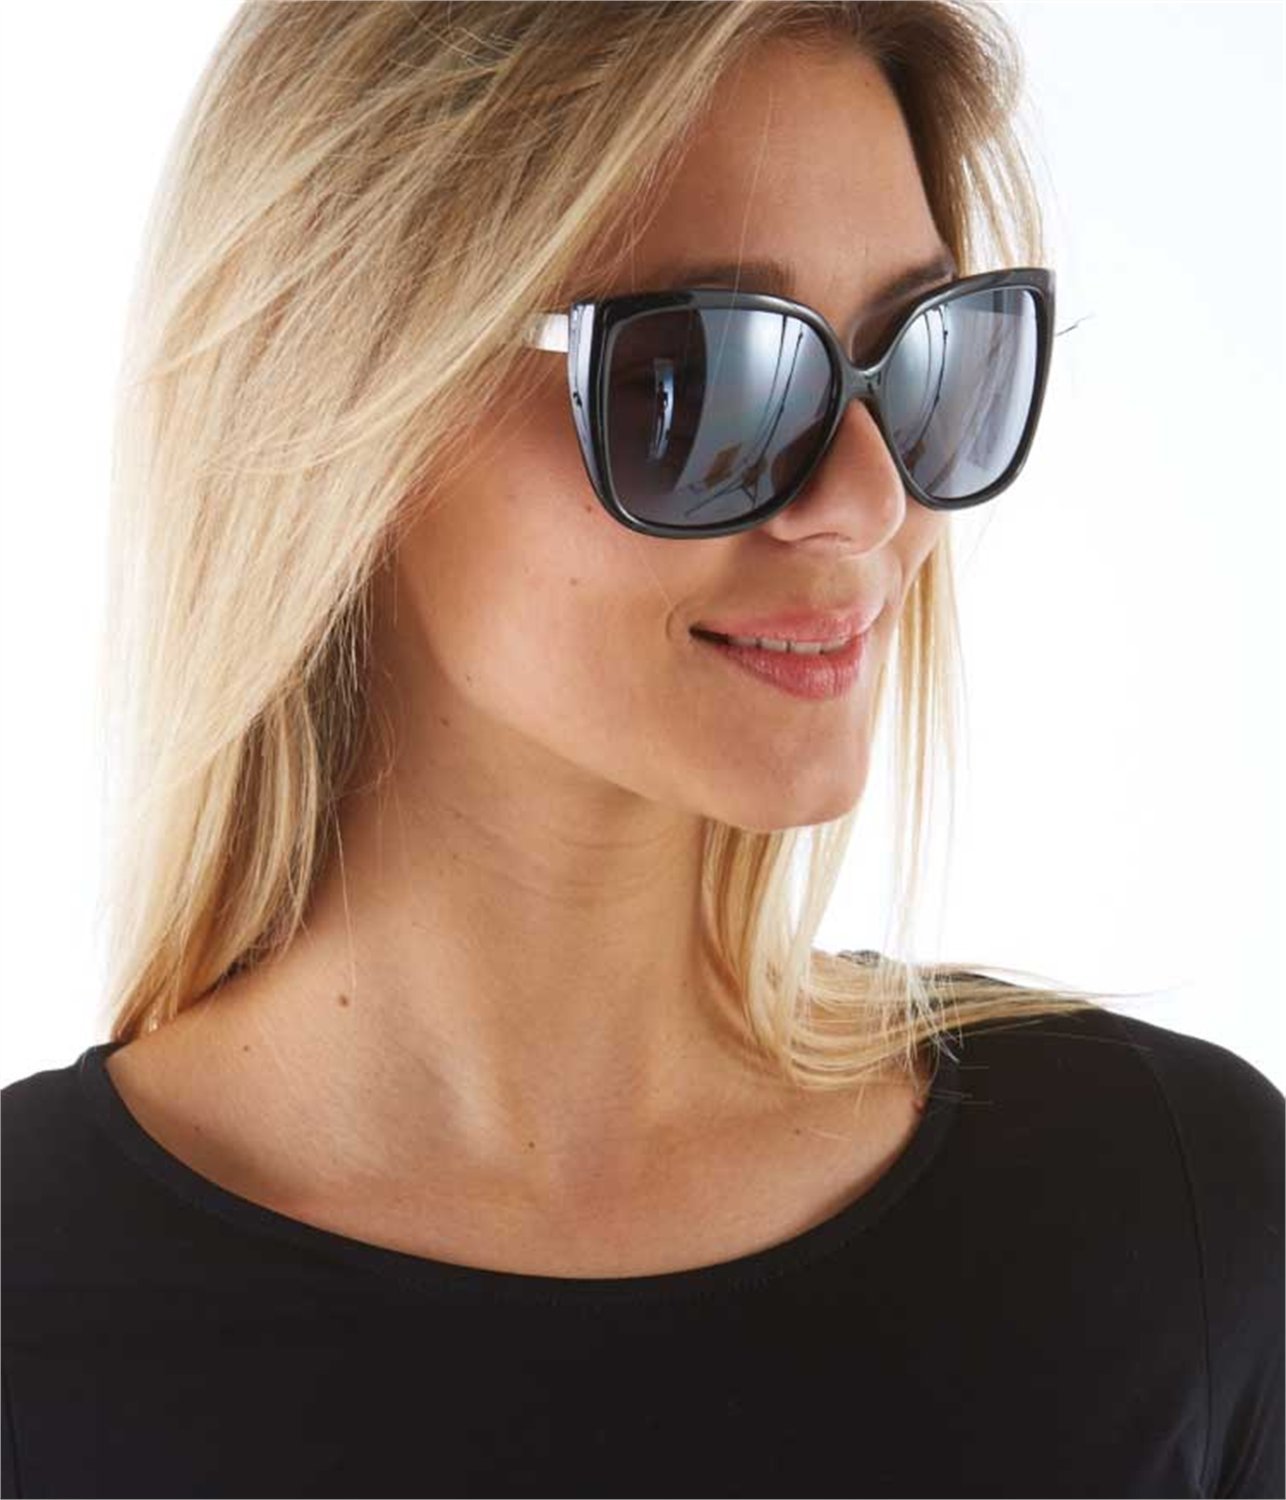 Camaieu nagy női napszemüveg 2015 fotója